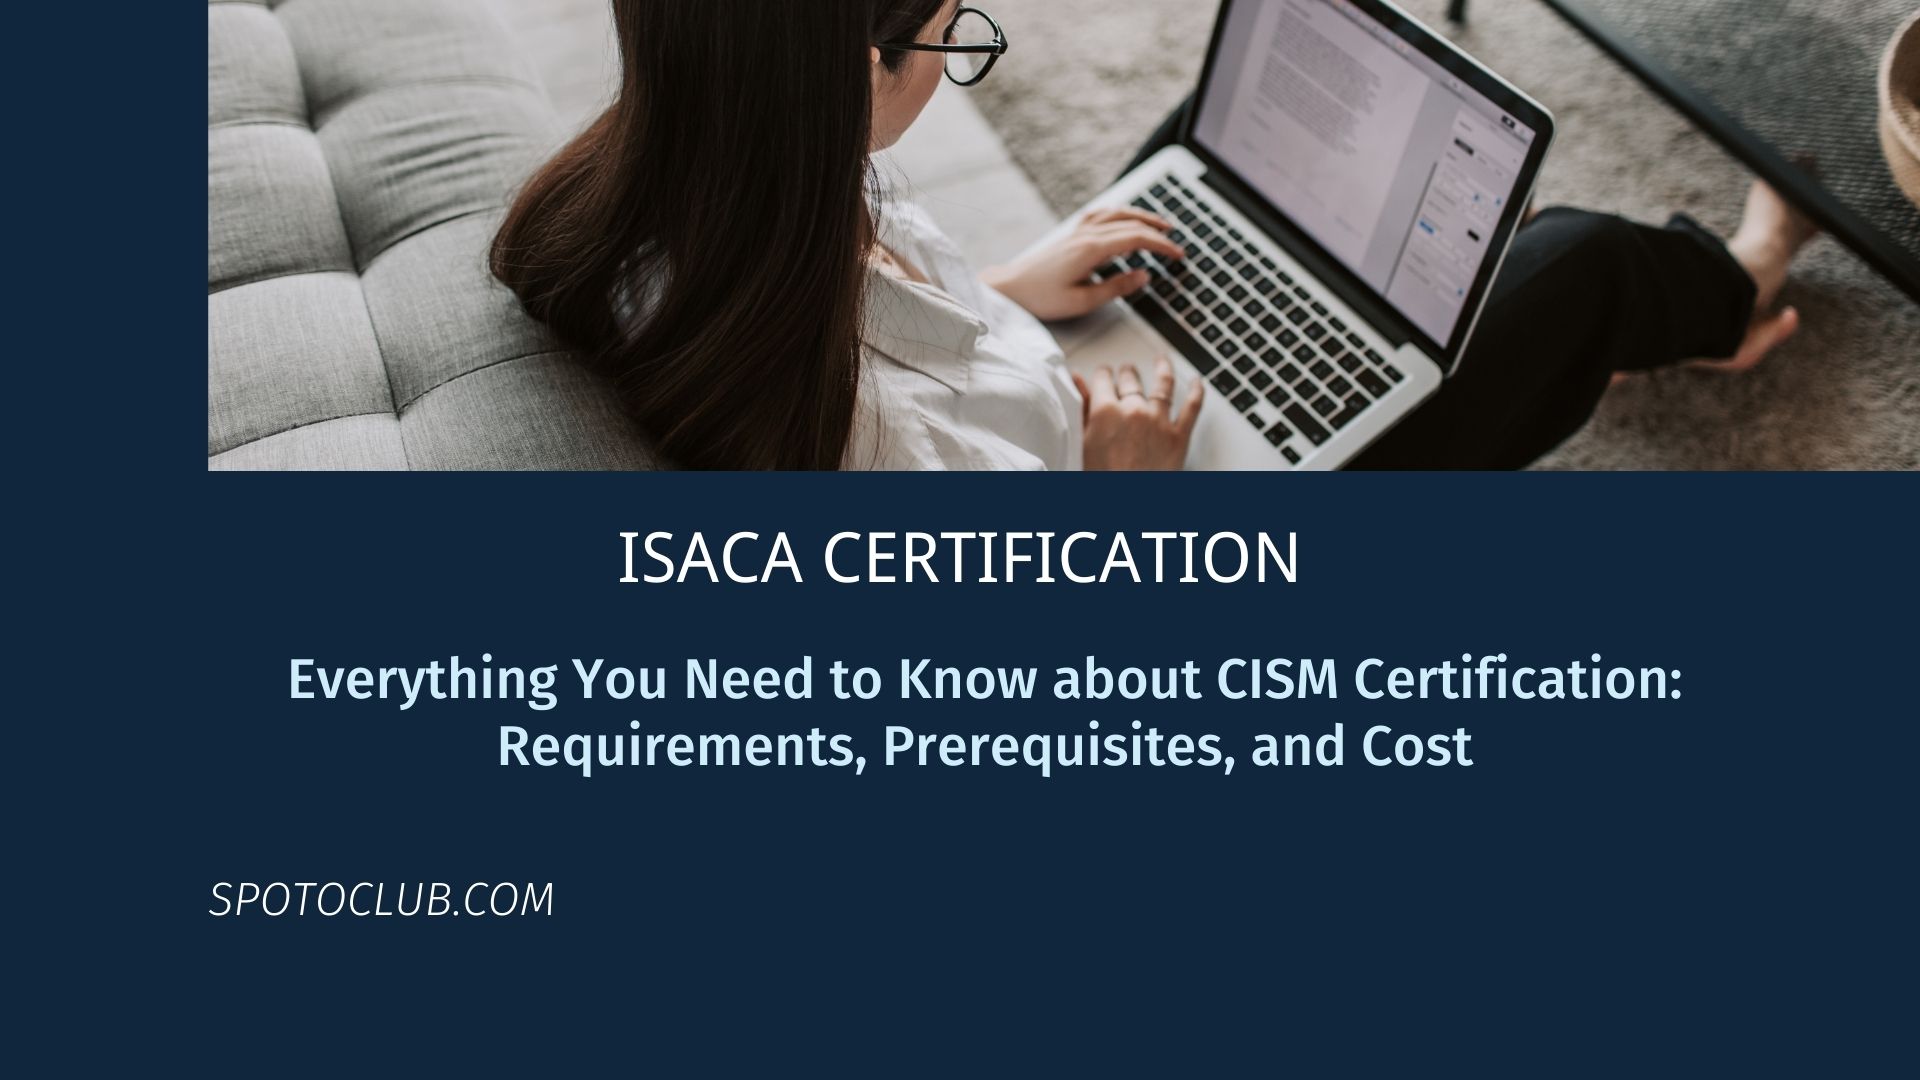 CISM Certification Requirements